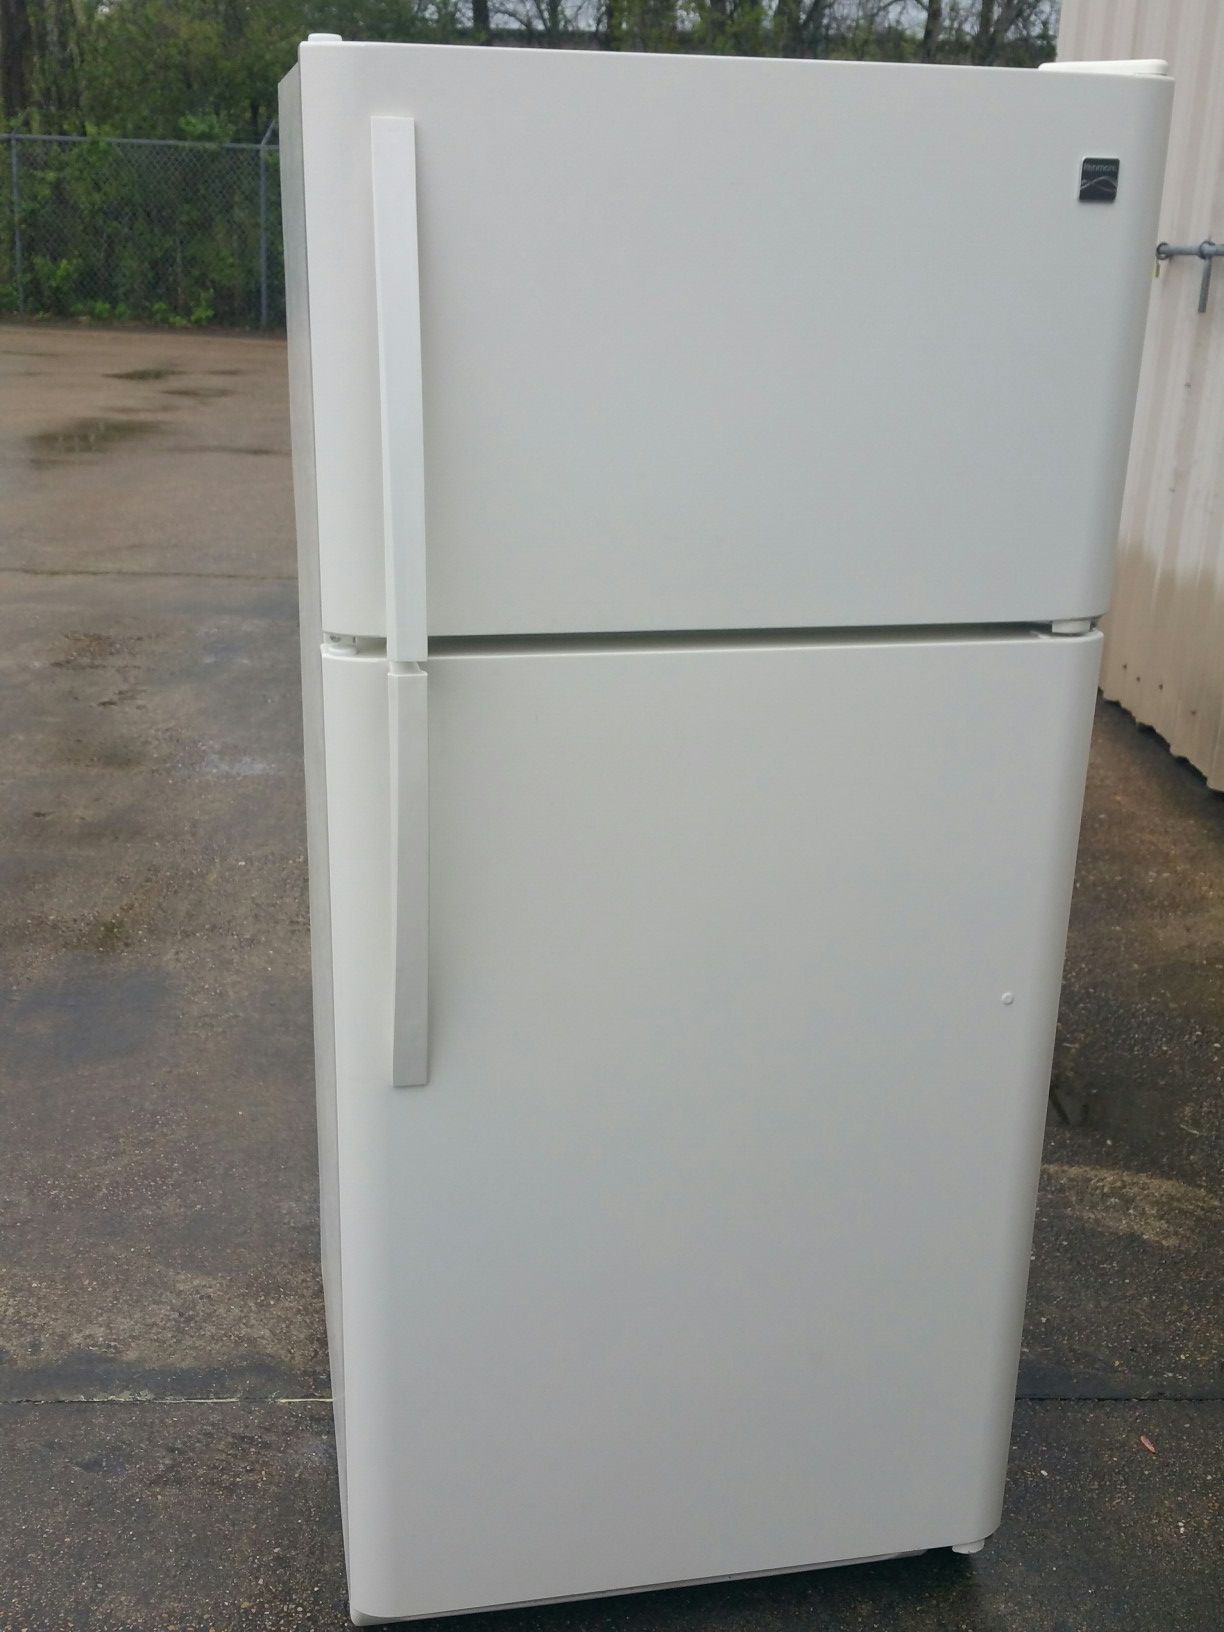 Kemore top freezer refrigerator